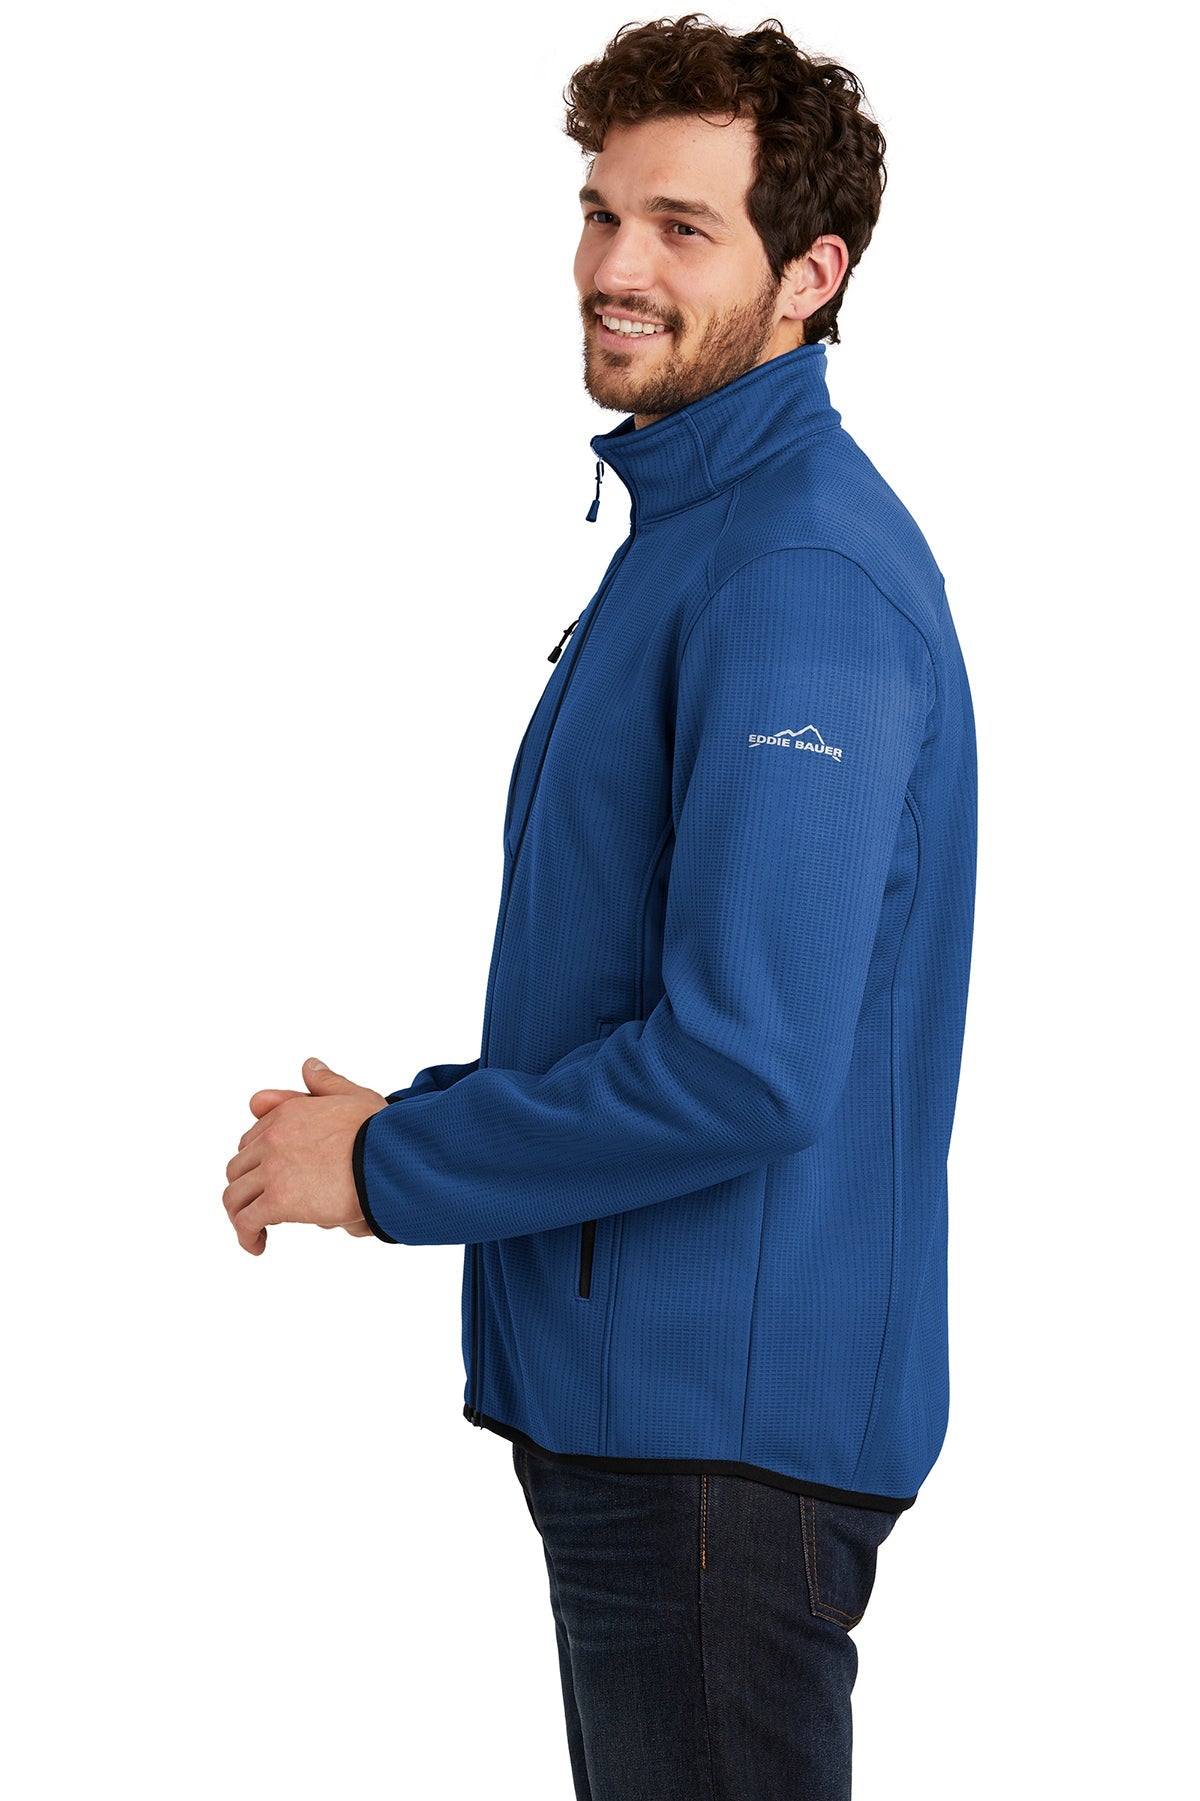 eddie bauer_eb242 _cobalt blue_company_logo_jackets